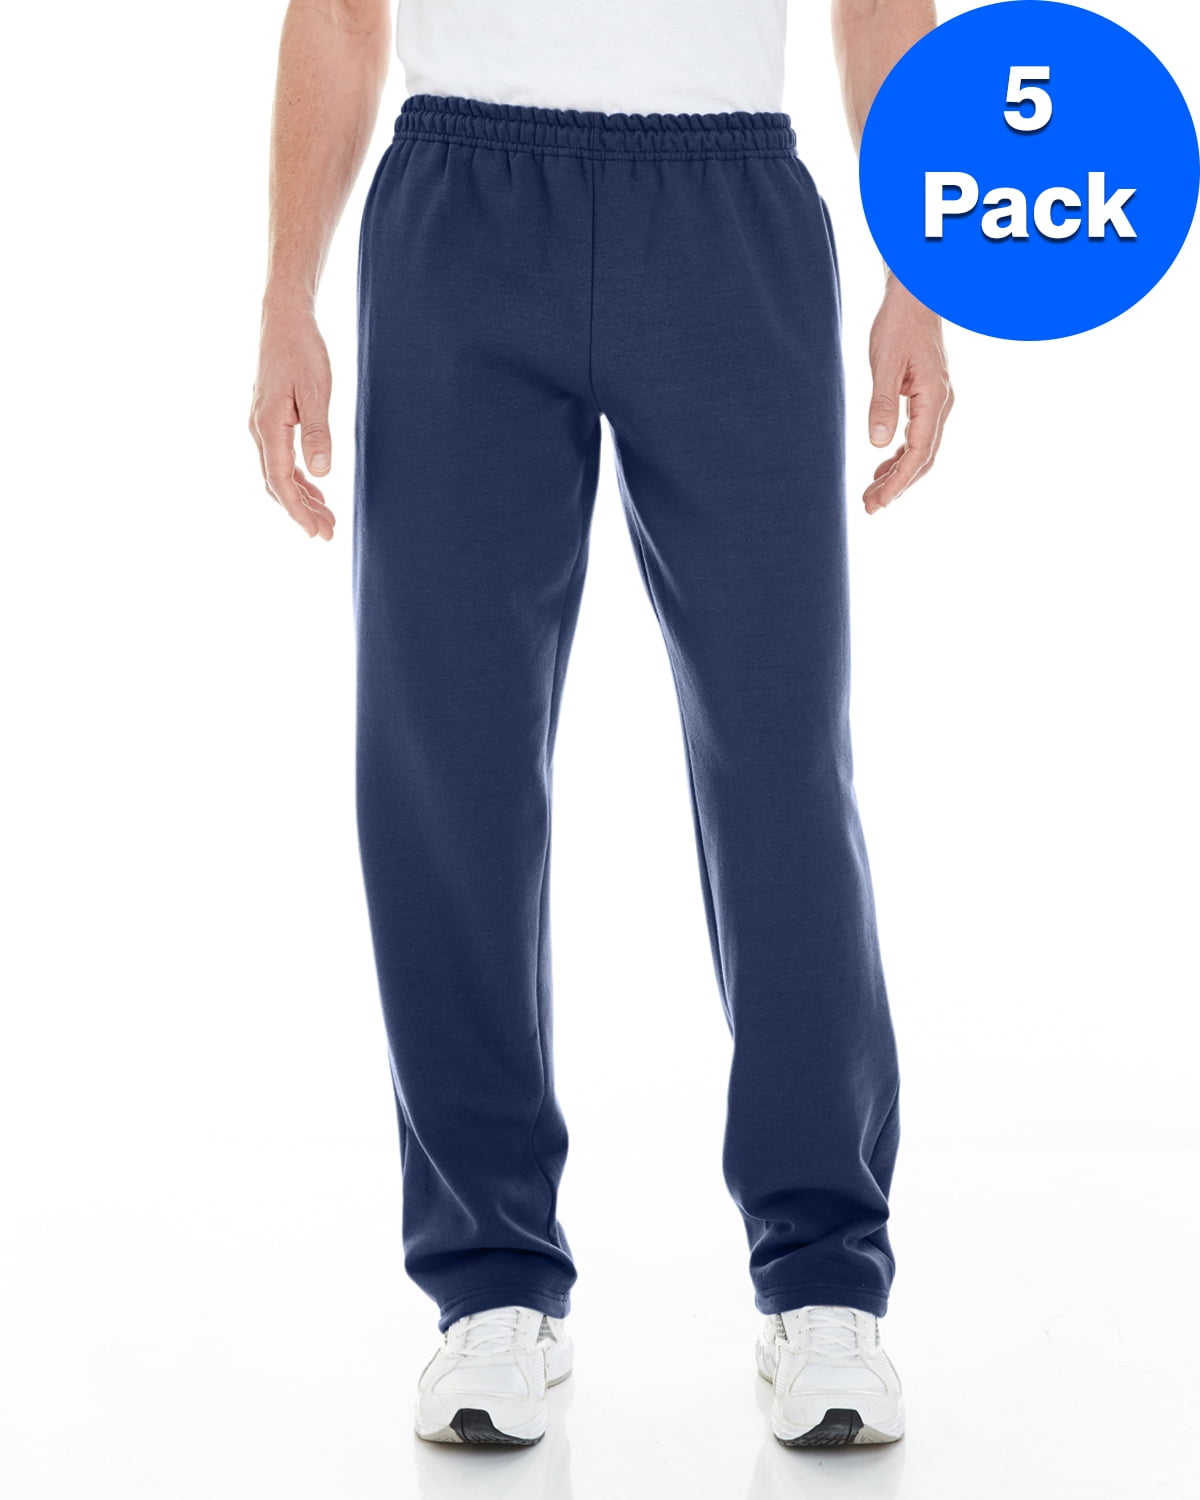 Mens 8 oz. Open-Bottom Sweatpants with Pockets 5 Pack - Walmart.com